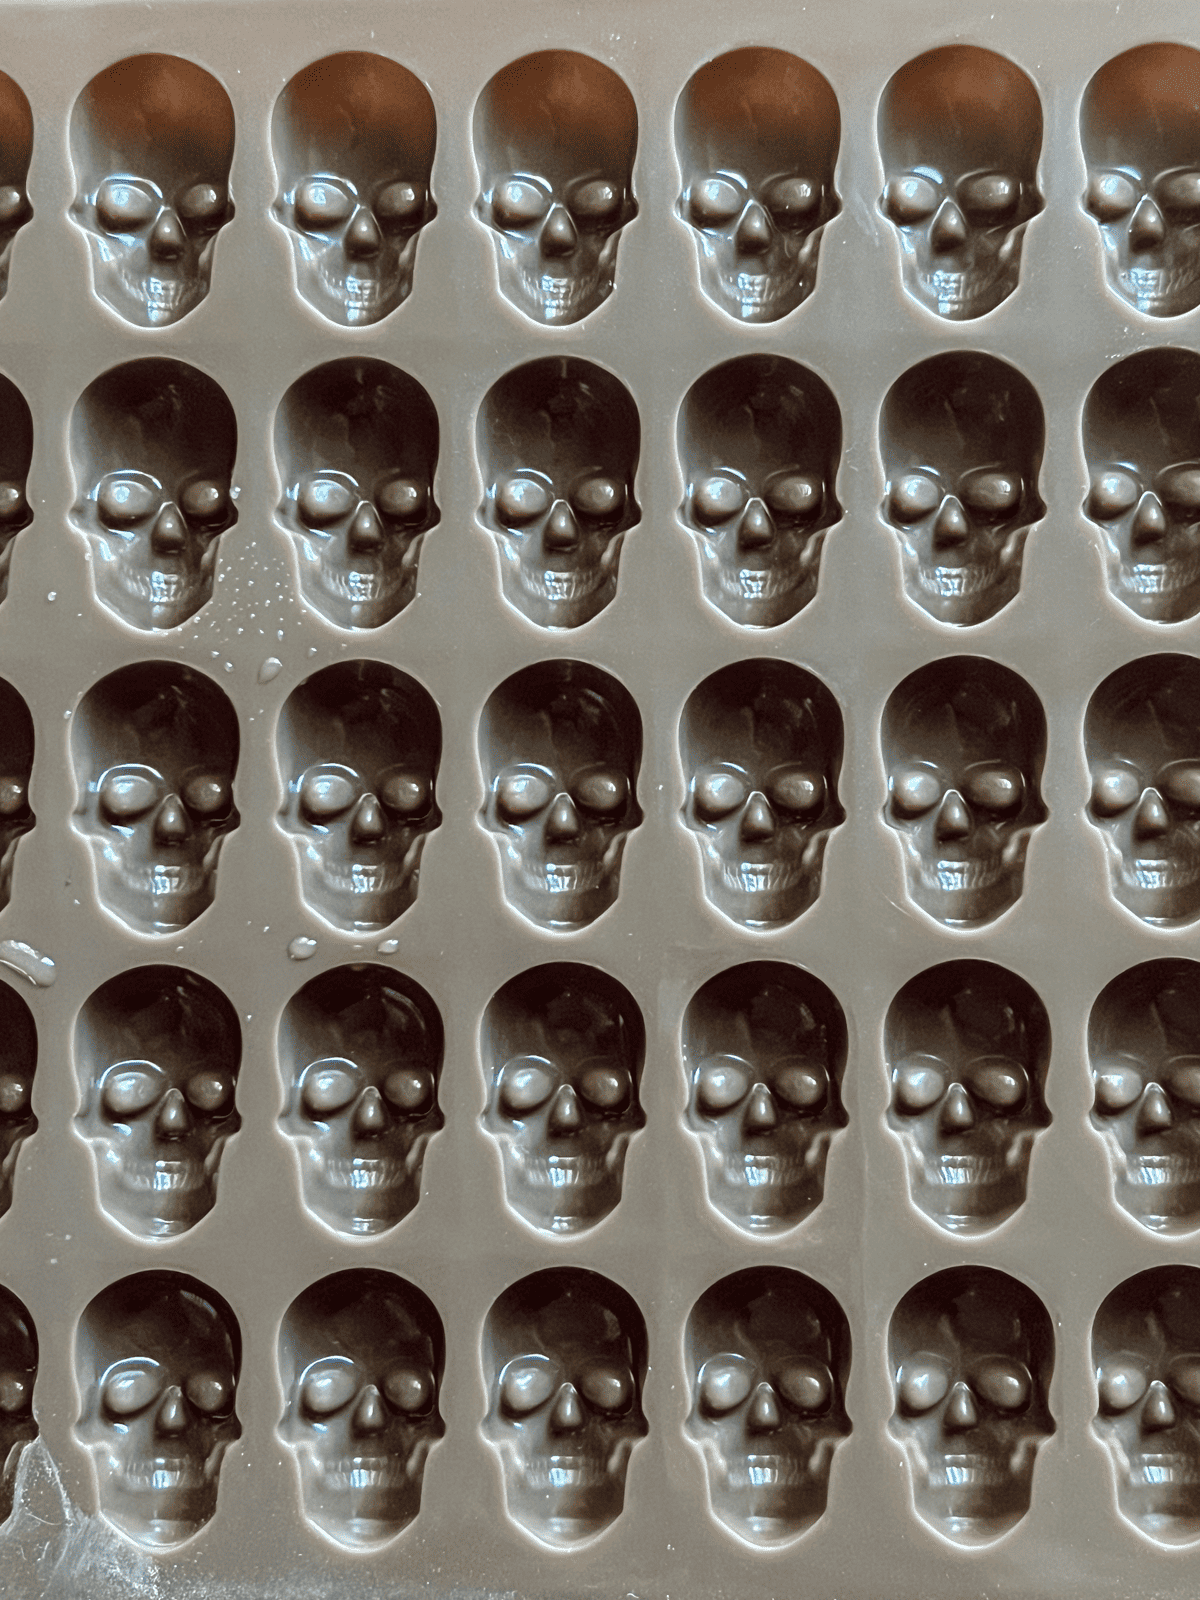 Skull shaped silicone mold for baking or freezing.